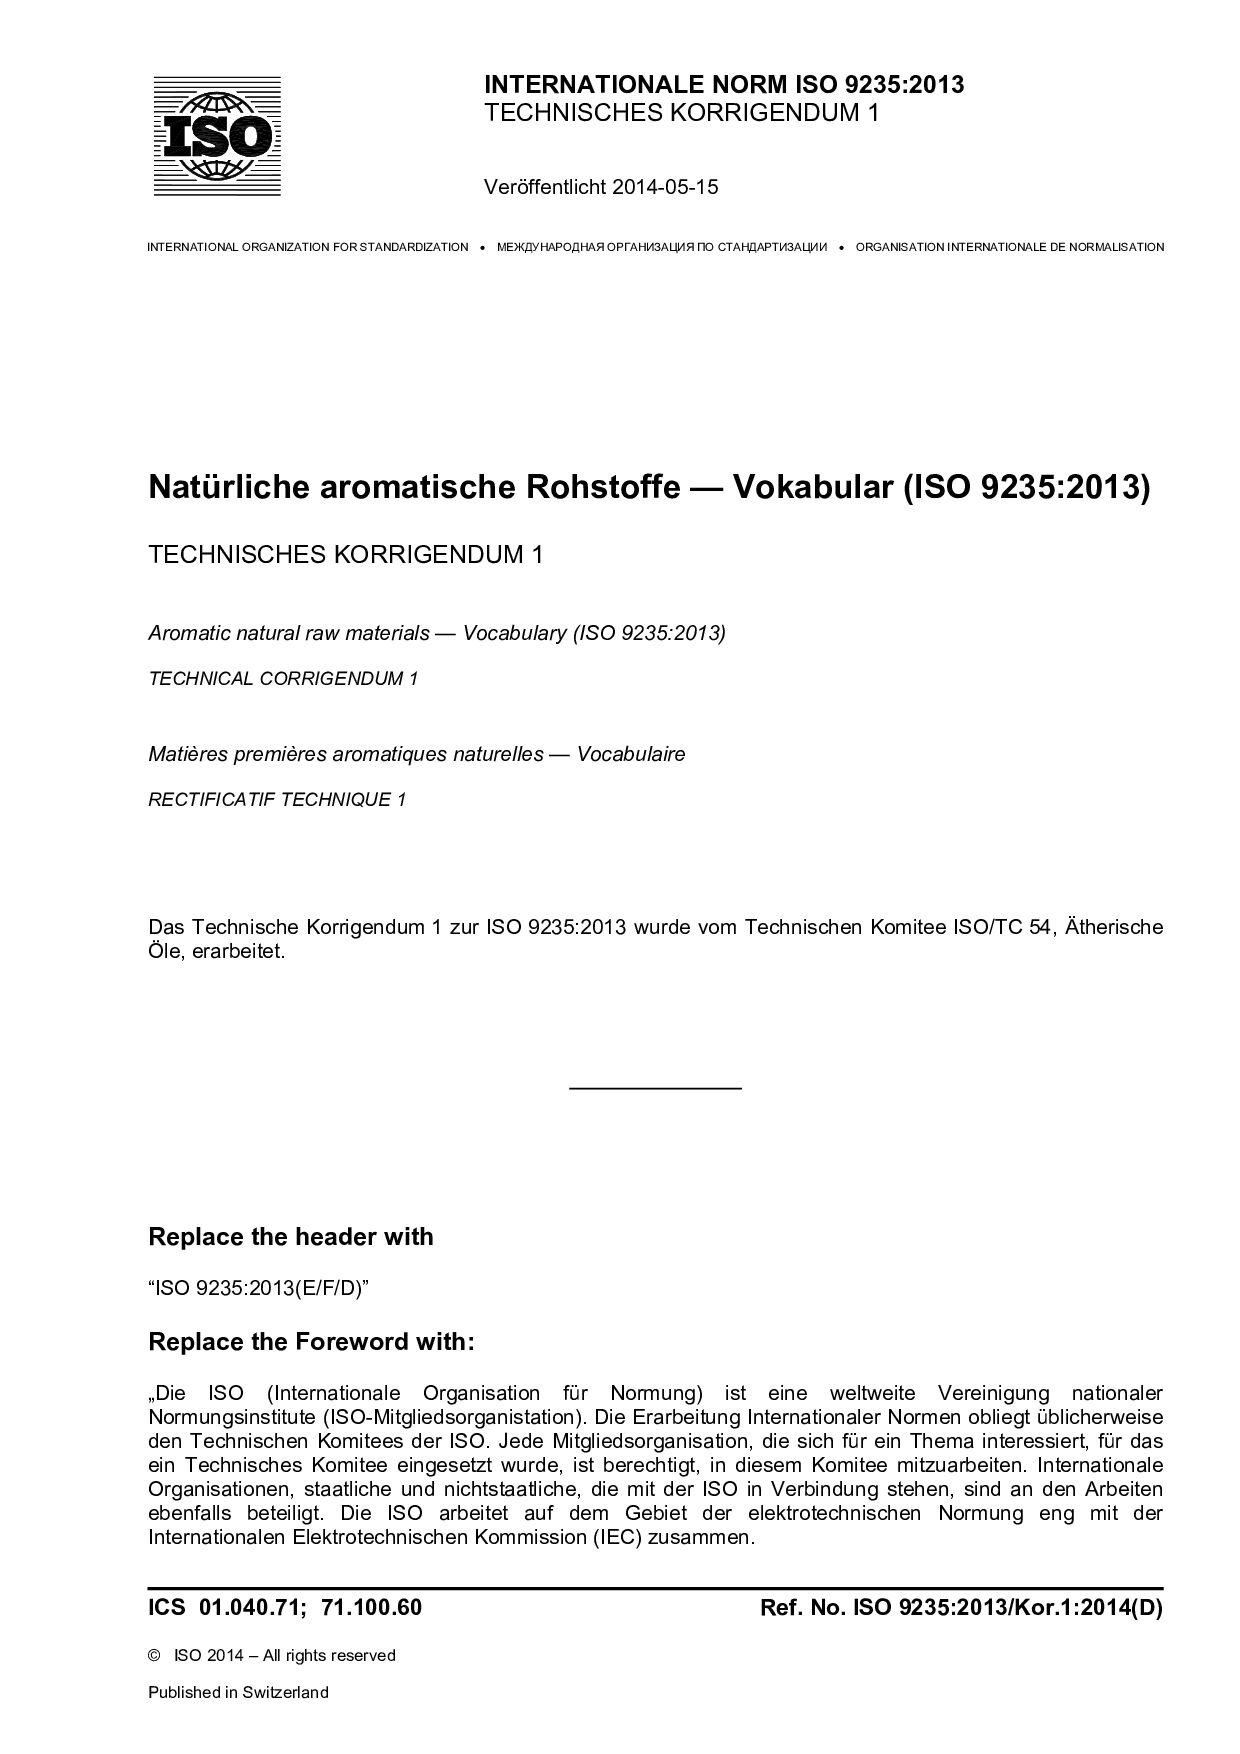 ISO 9235 Technical Corrigendum 1-2014